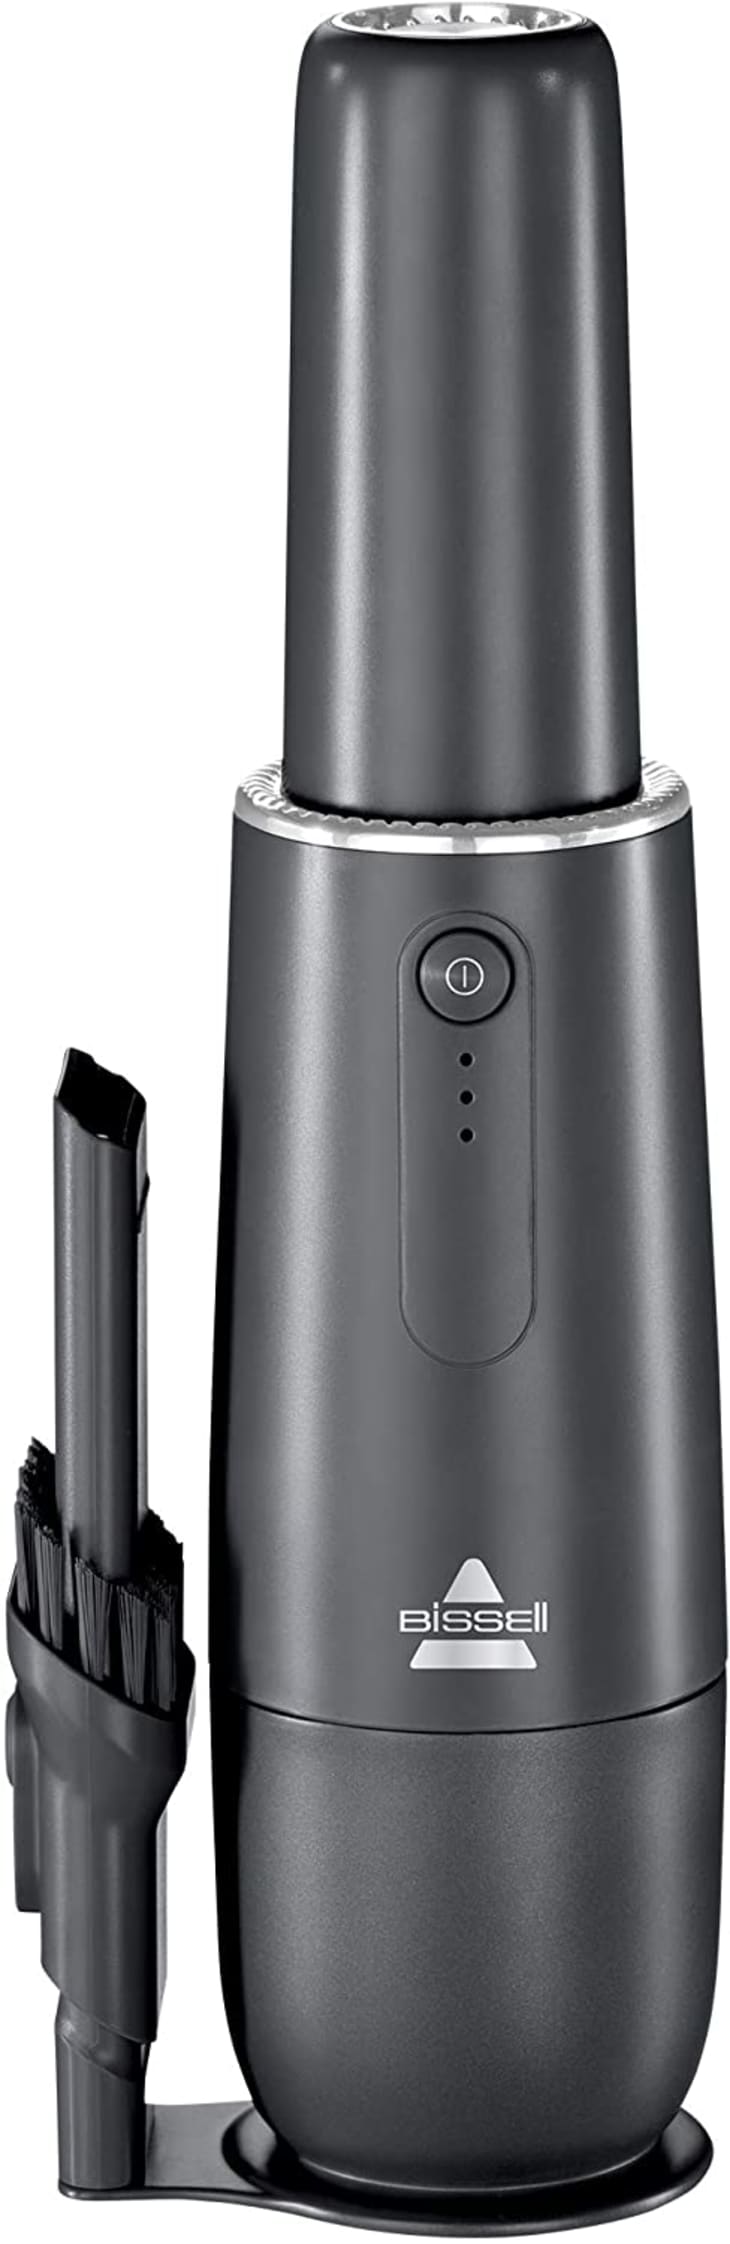 Product Image: BISSELL AeroSlim Cordless Handheld Vacuum